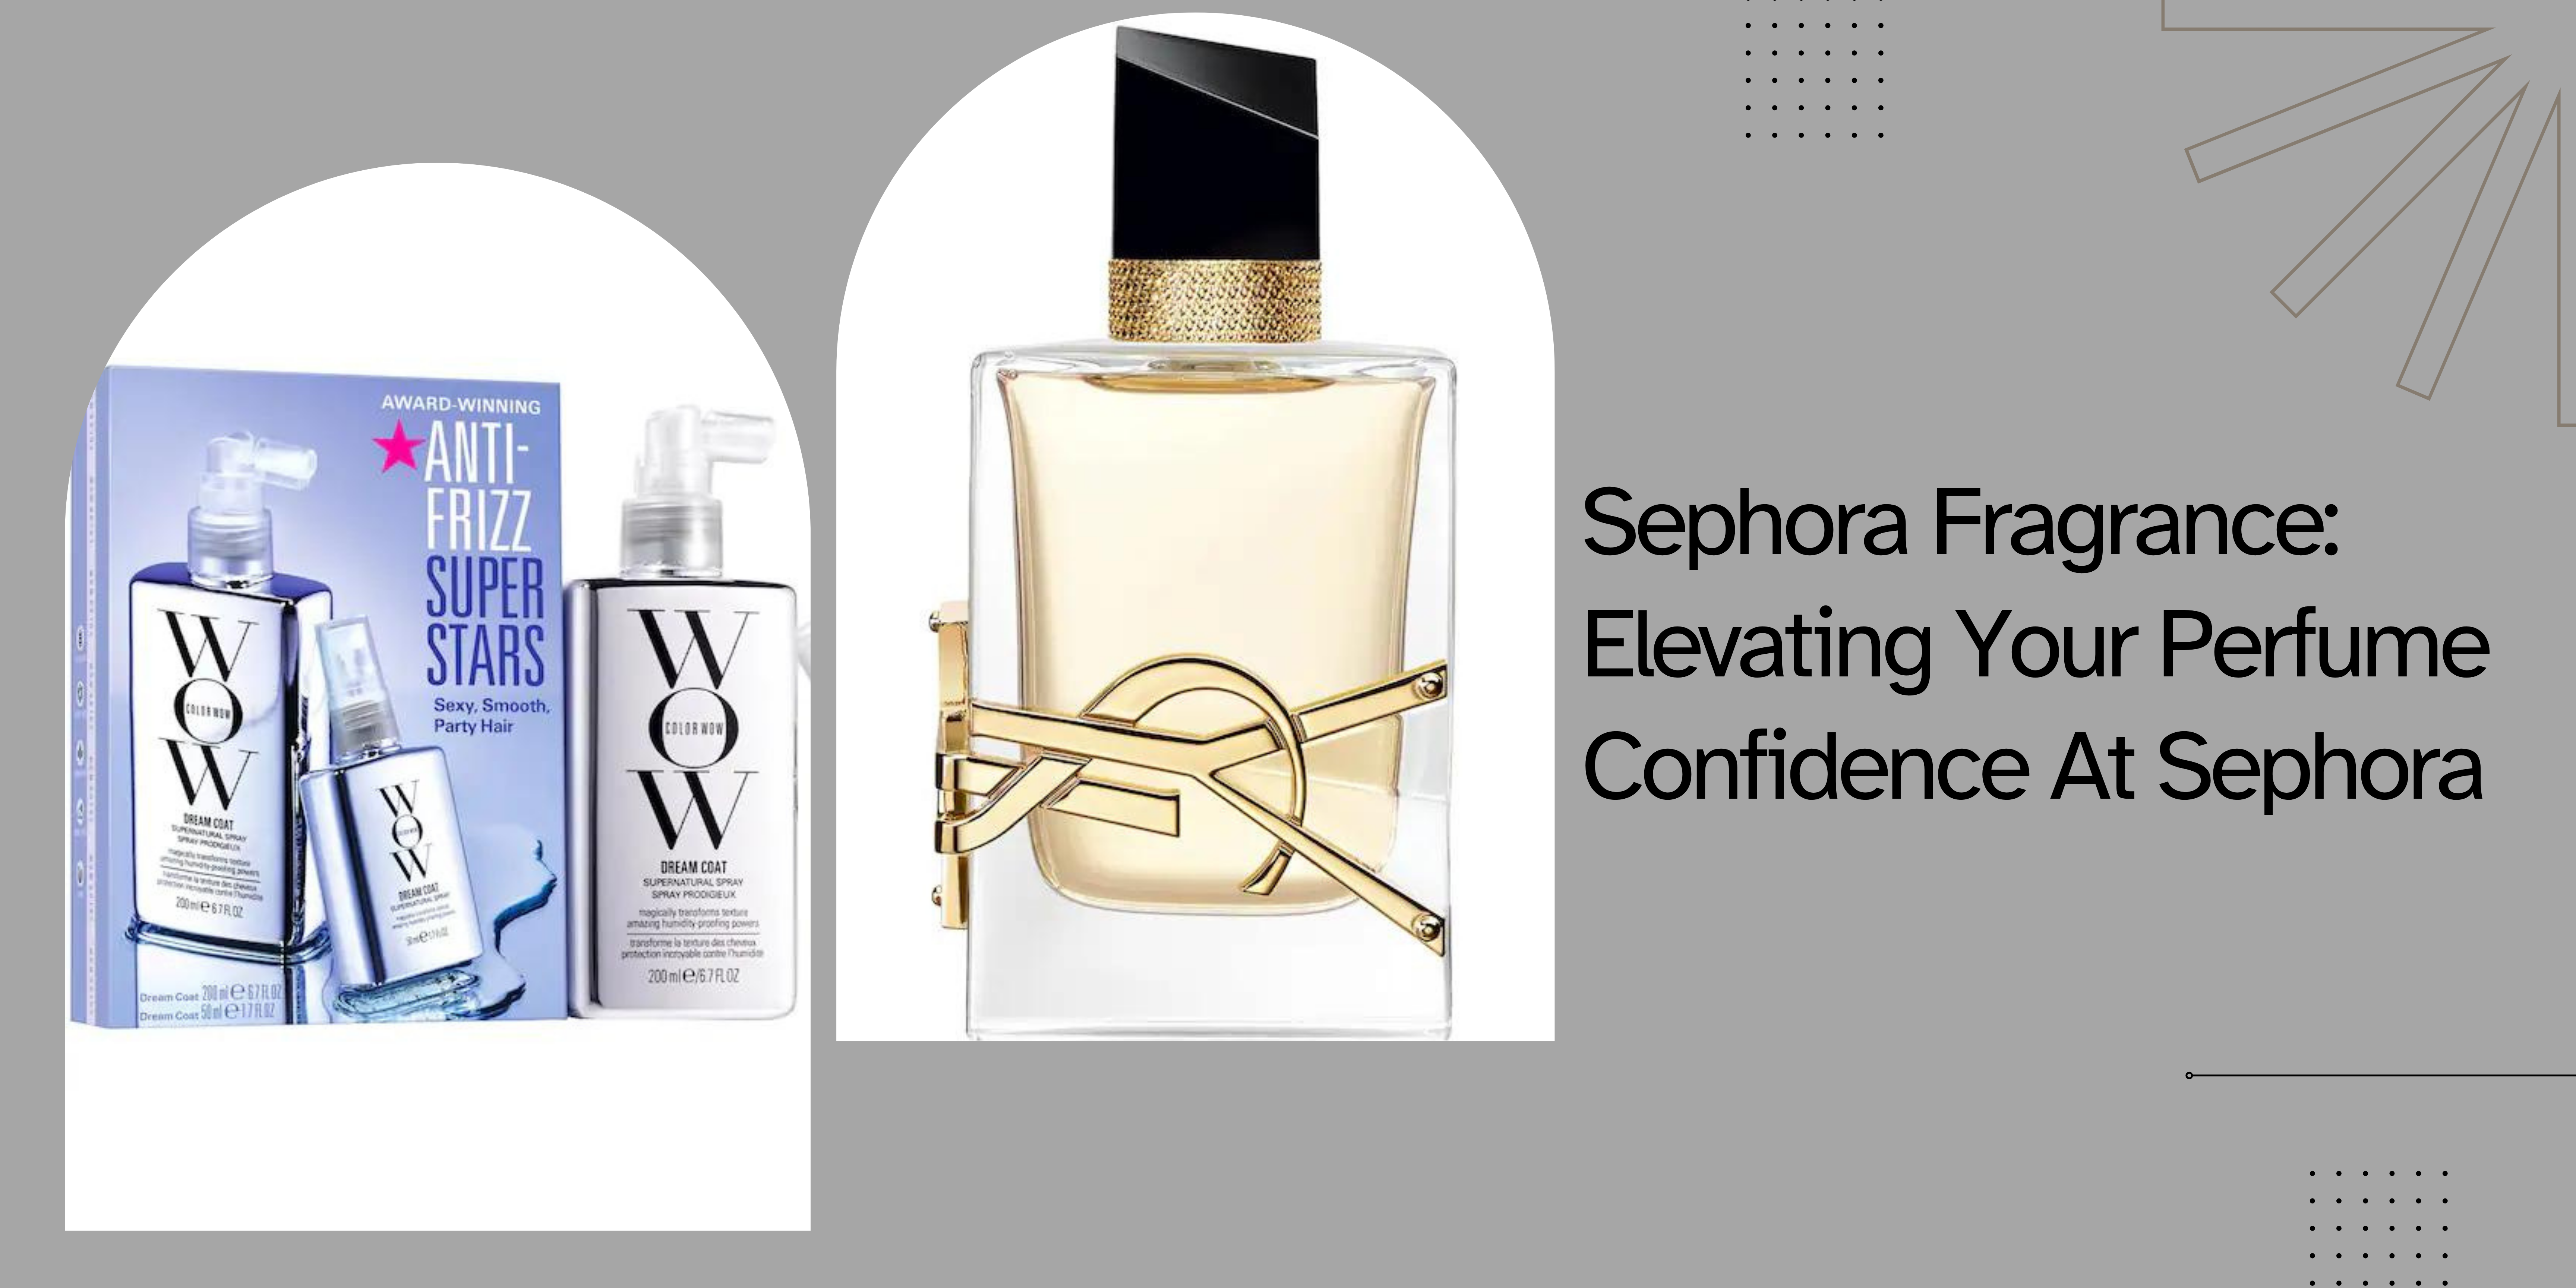 Sephora Fragrance: Elevating Your Perfume Confidence